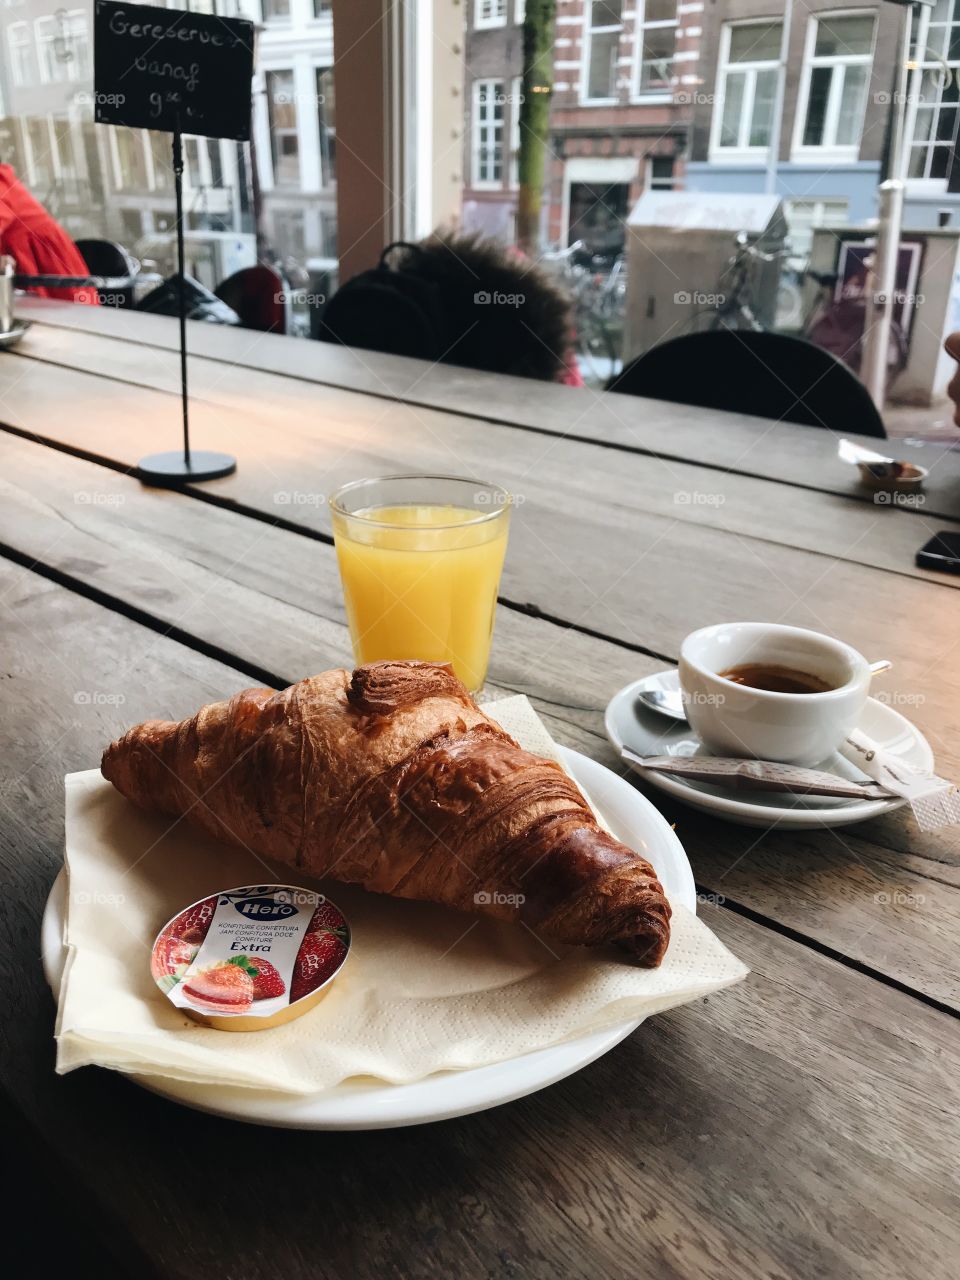 Good morning Amsterdam 🥐